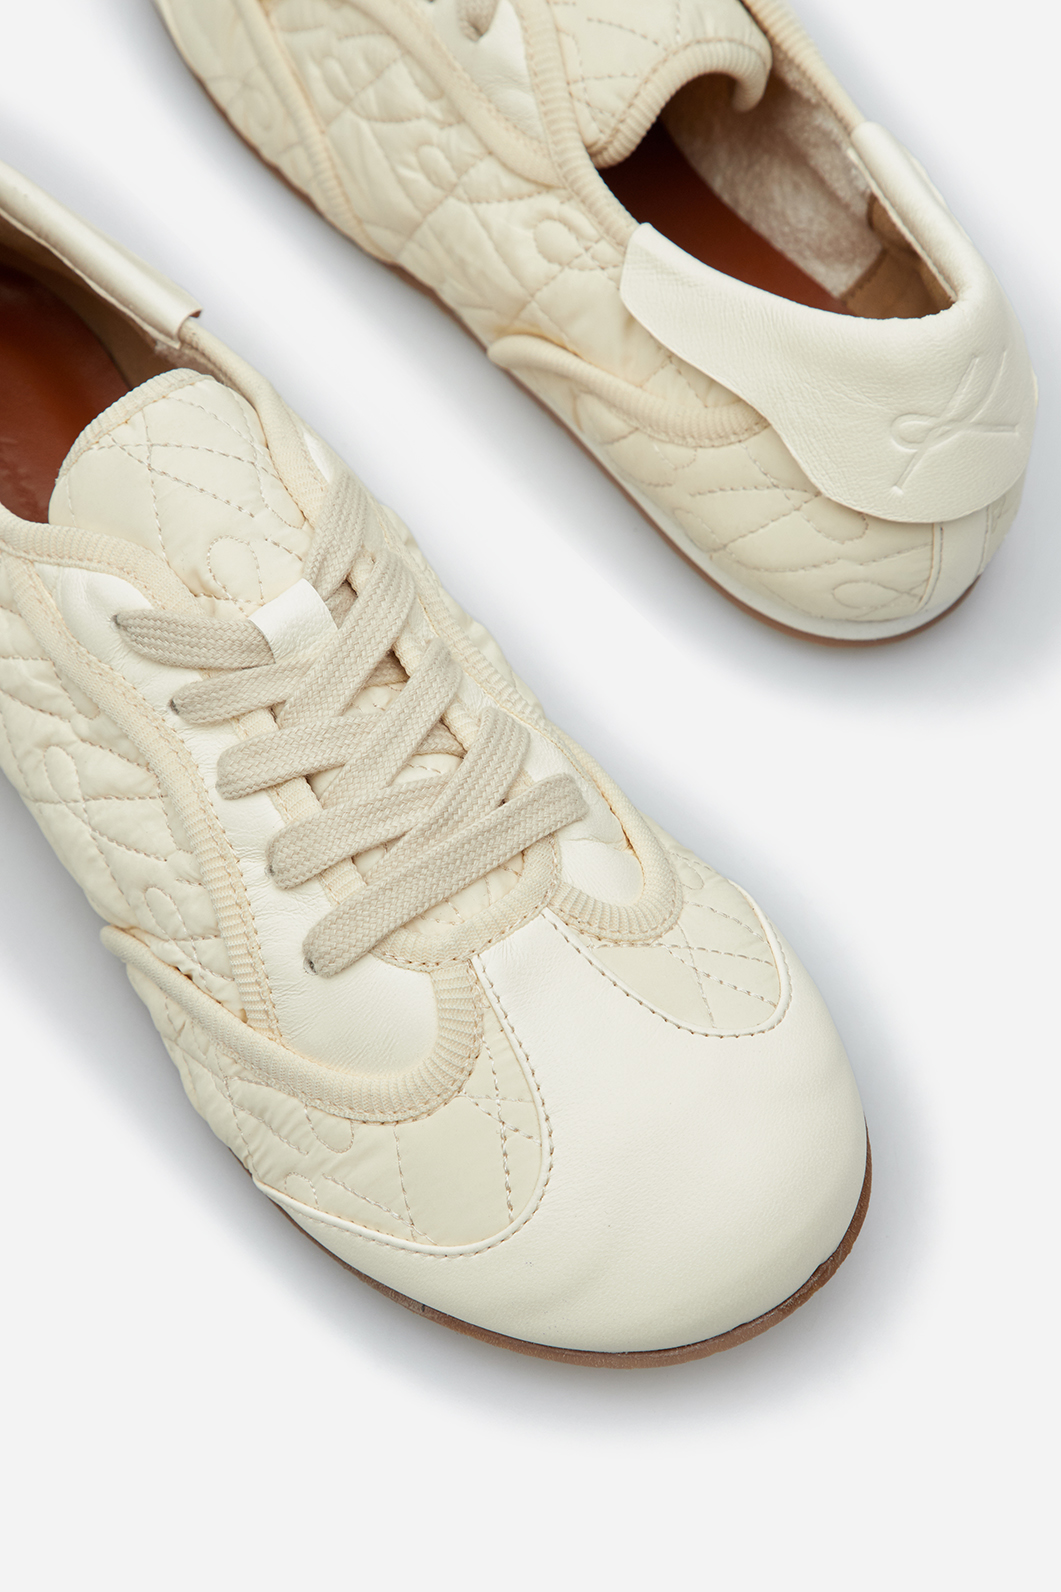 Bowley white textile sneakers